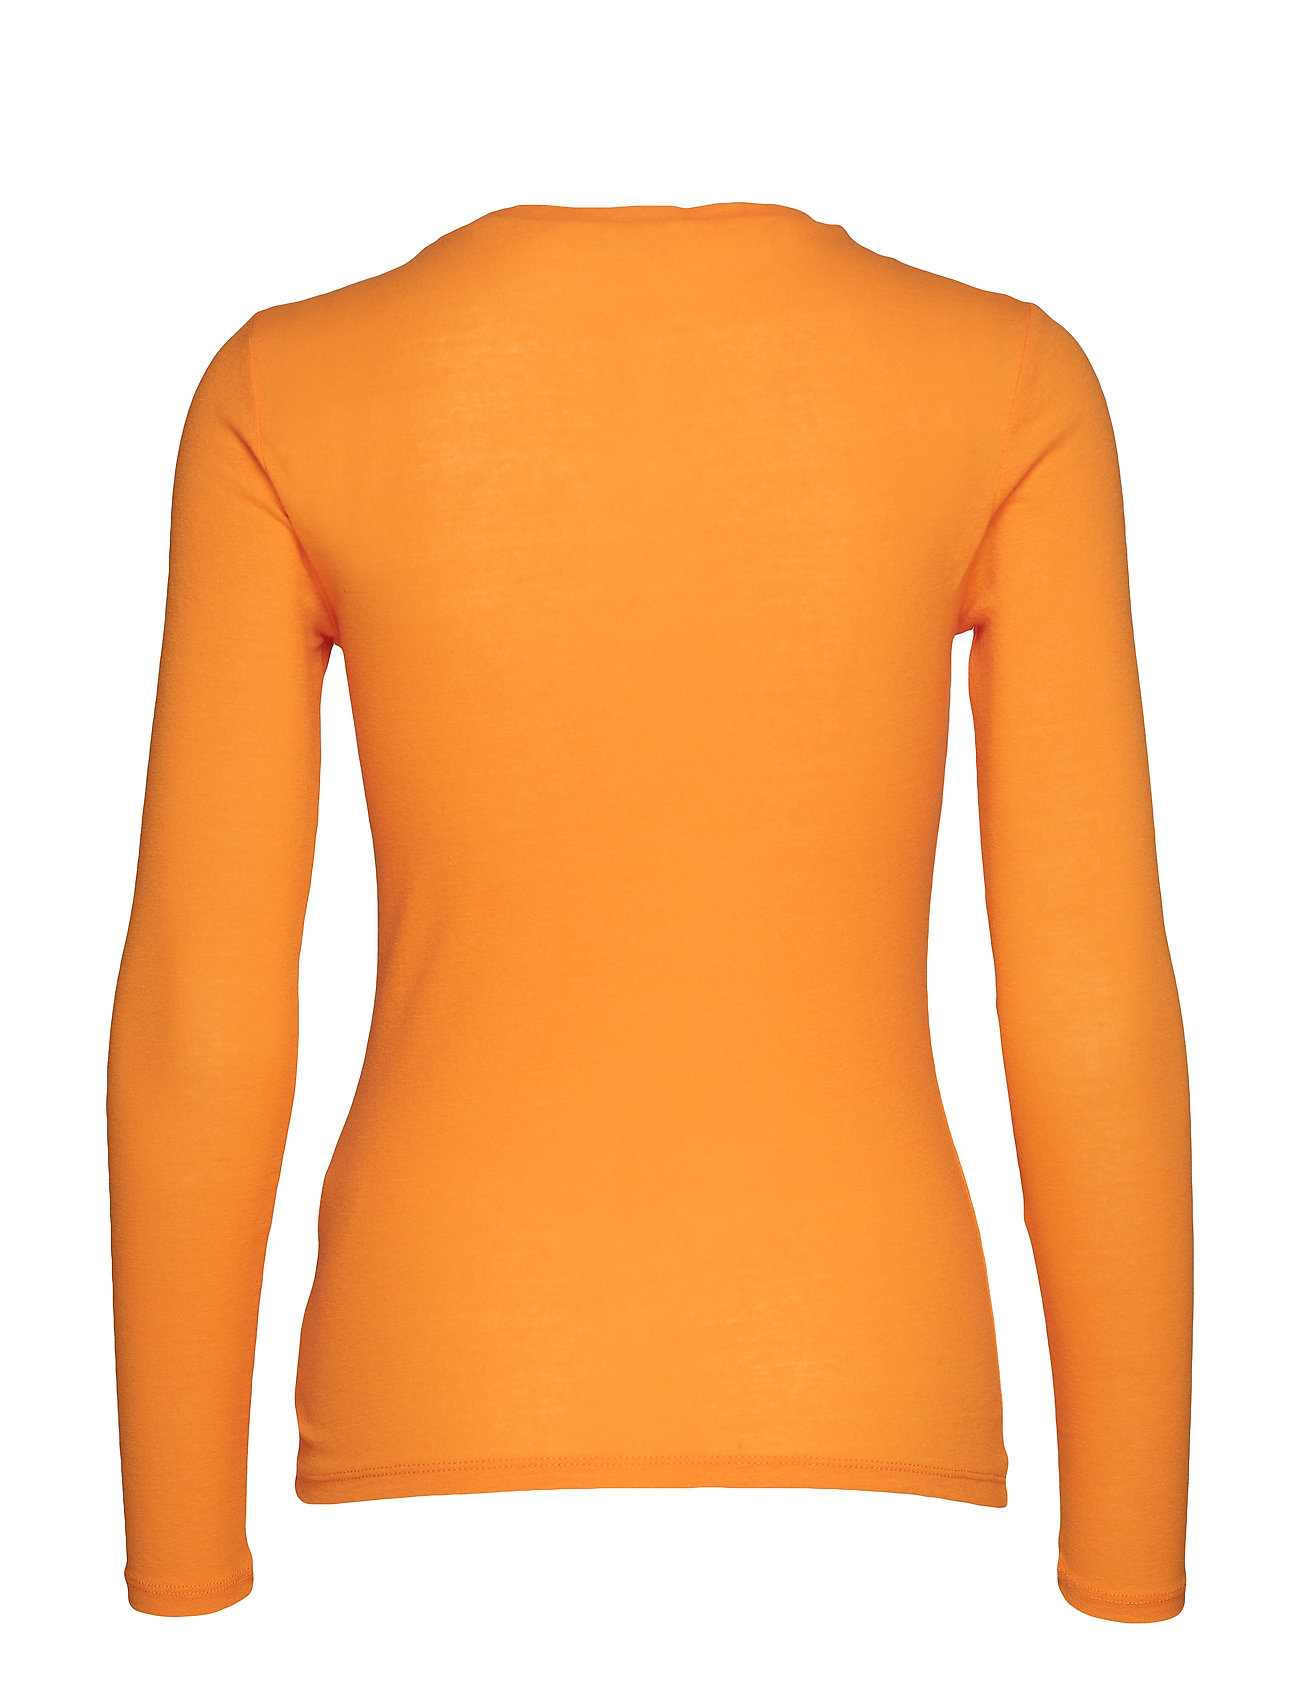 Orange Envii Ls Tee 5928 Langærmet T-shirt Orange Envii langærmede -shirts toppe for dame Pashion.dk